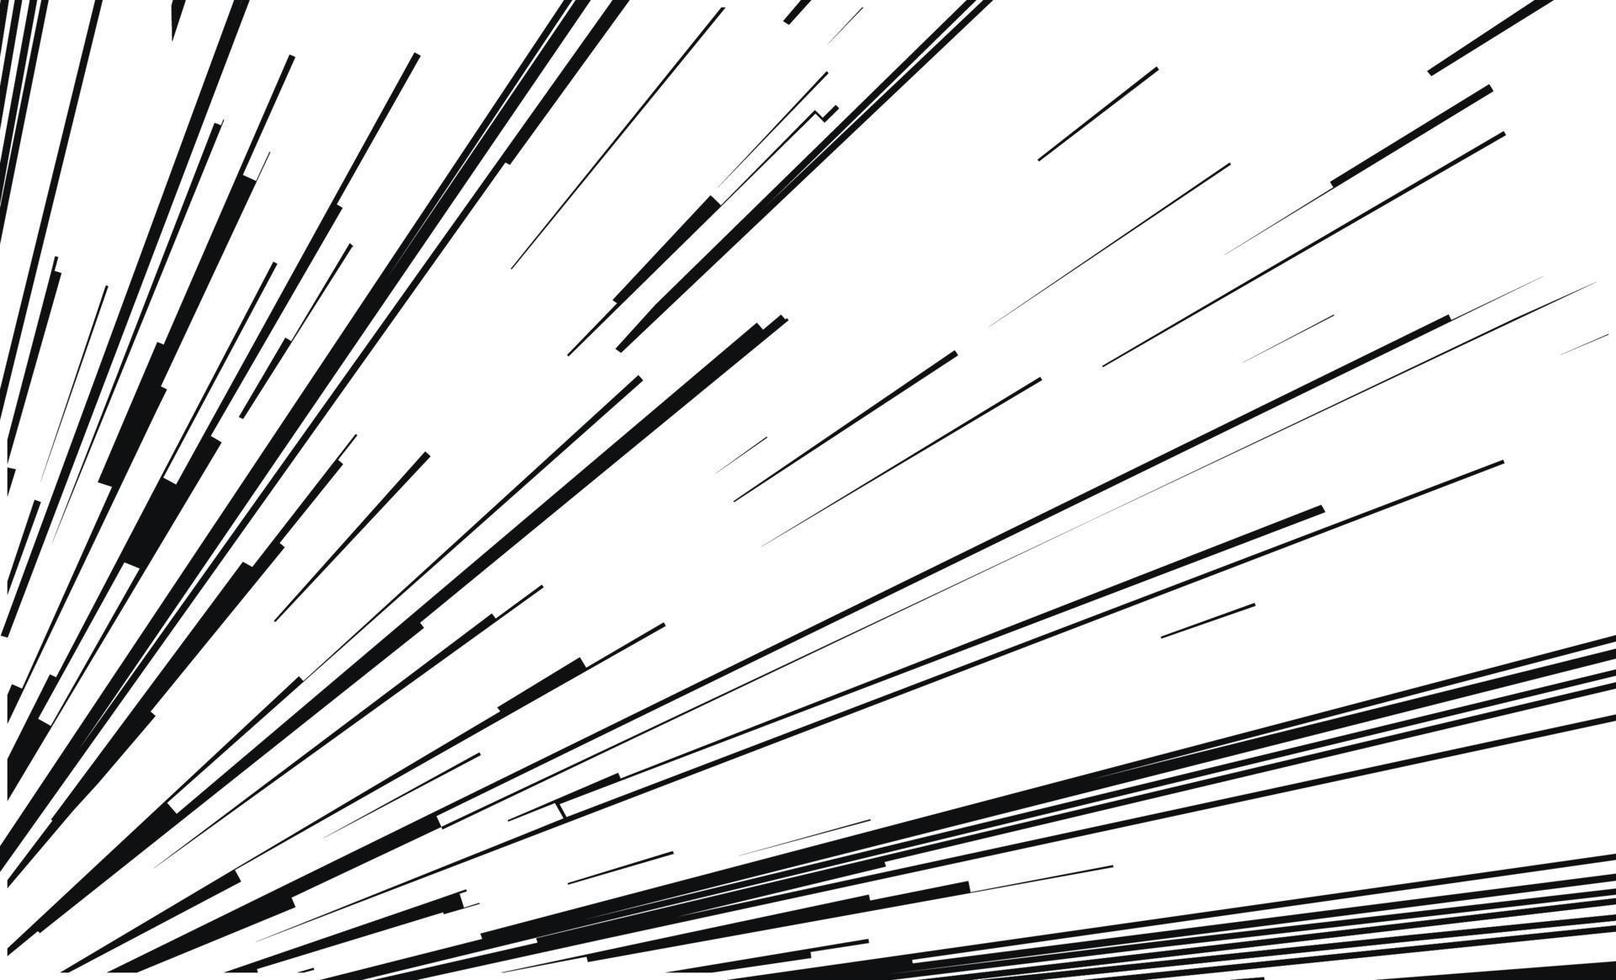 Comic book speed lines stripe effect vector